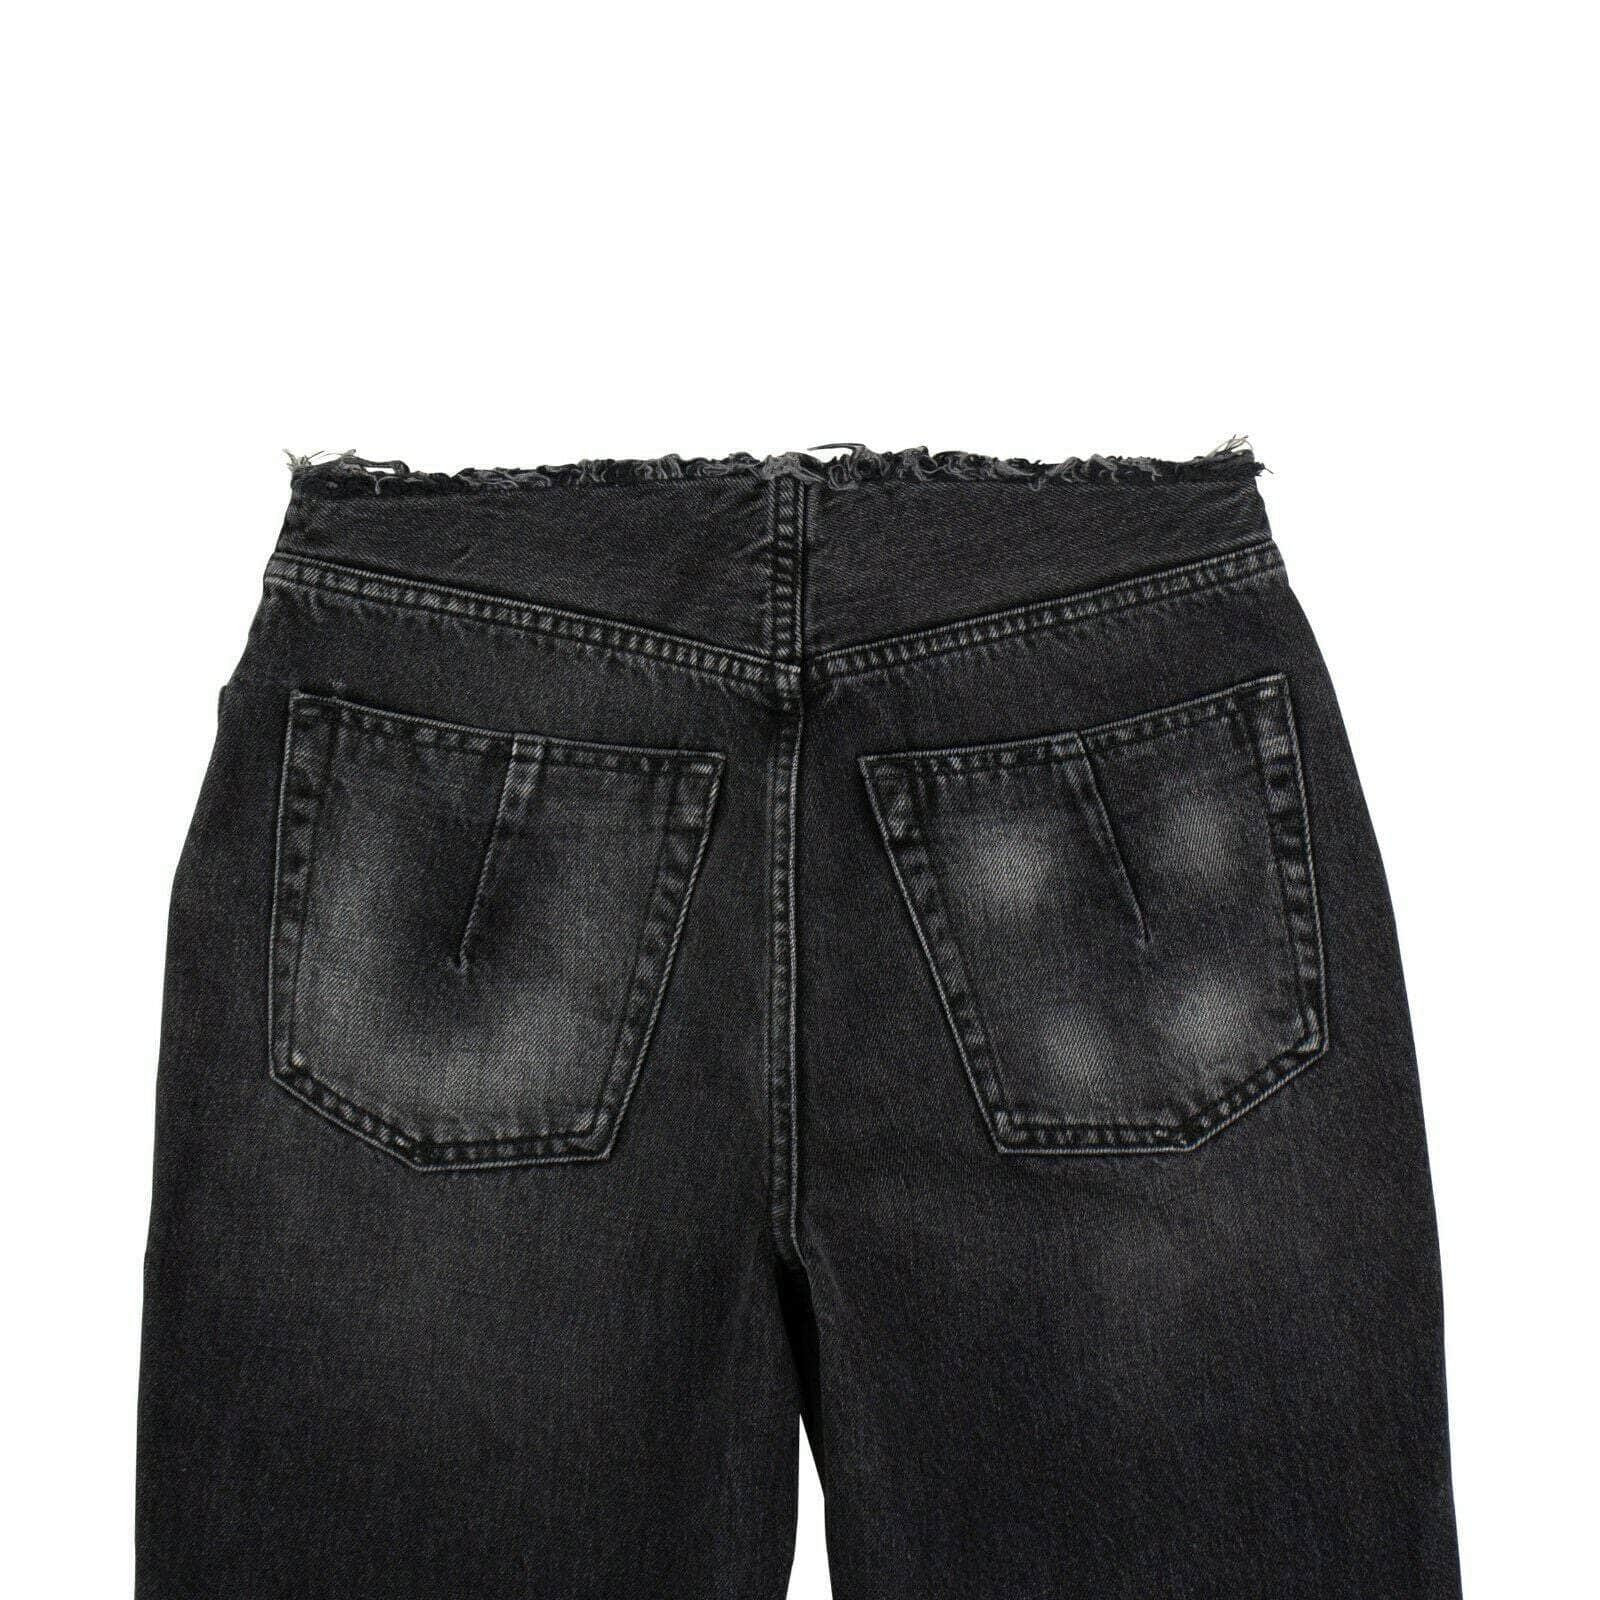 Unravel Project Women's Jeans 25 US Cotton Frayed Tapered Jeans Pants - Black JF6-UN-1021/25 JF6-UN-1021/25